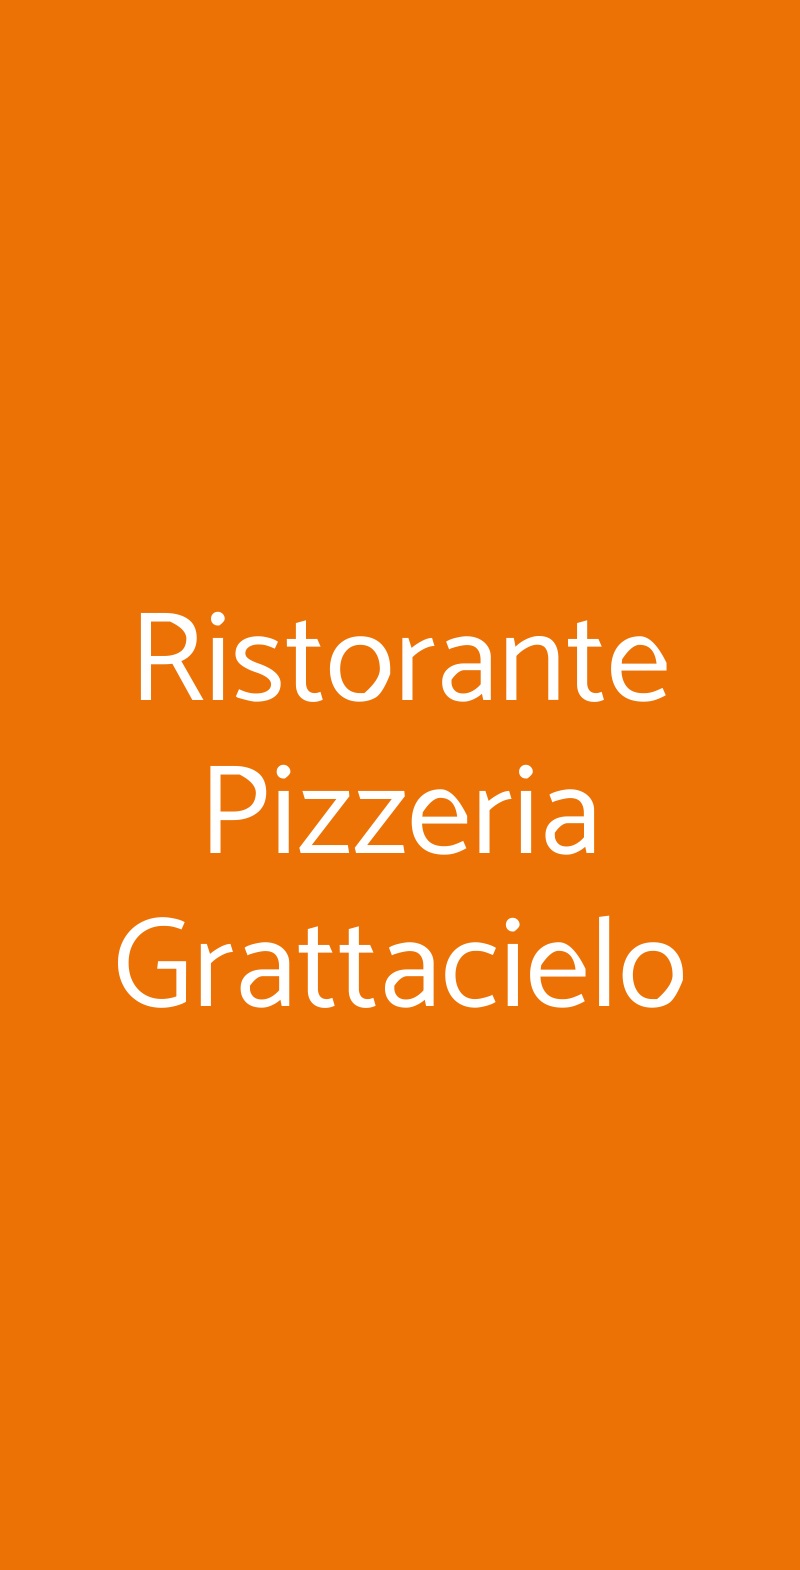 Ristorante Pizzeria Grattacielo Torino menù 1 pagina